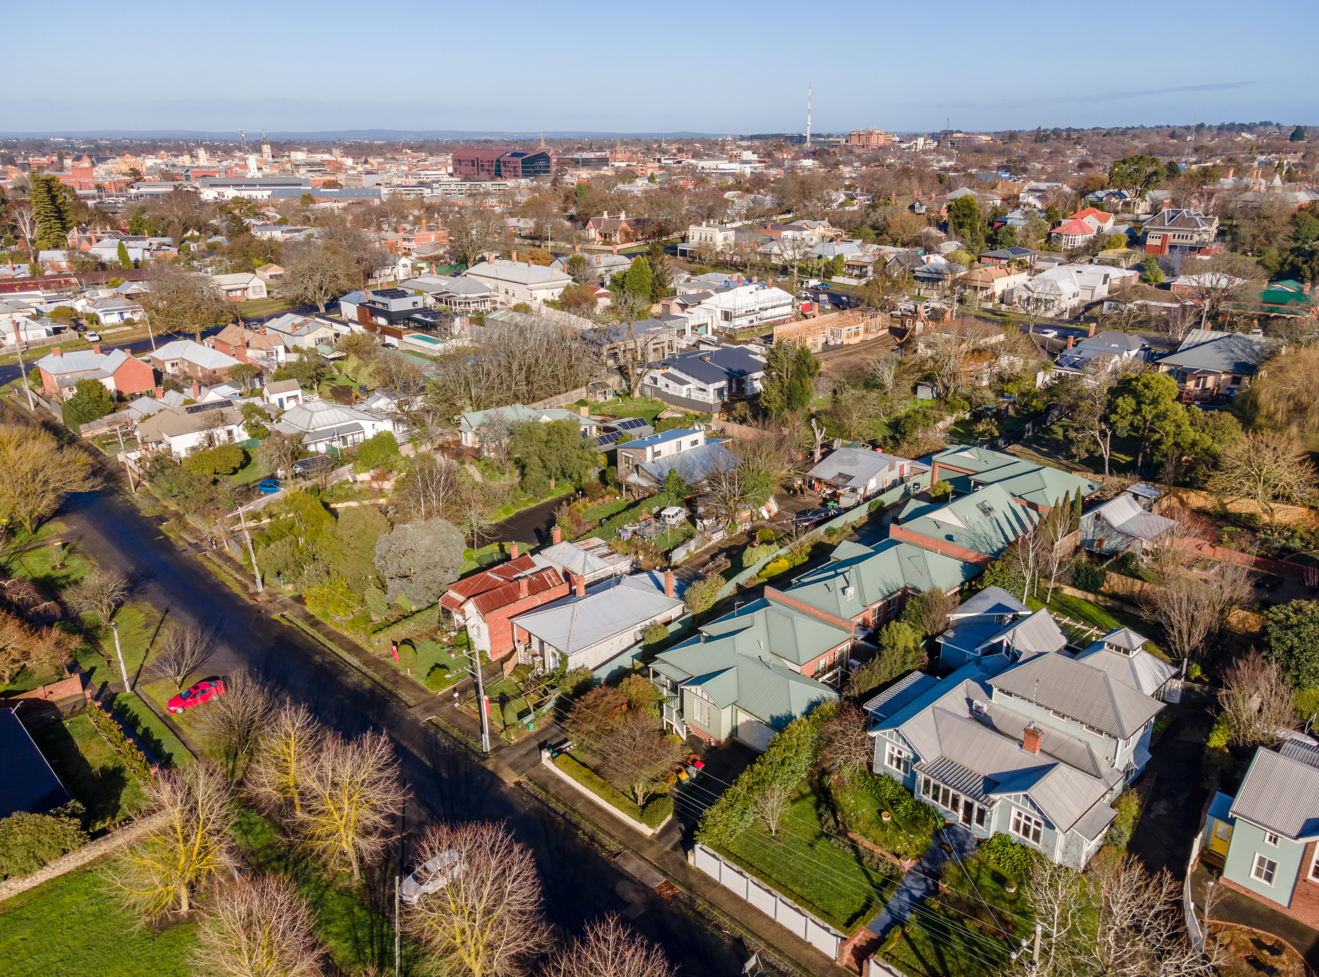 Generic image of residential area of Ballarat